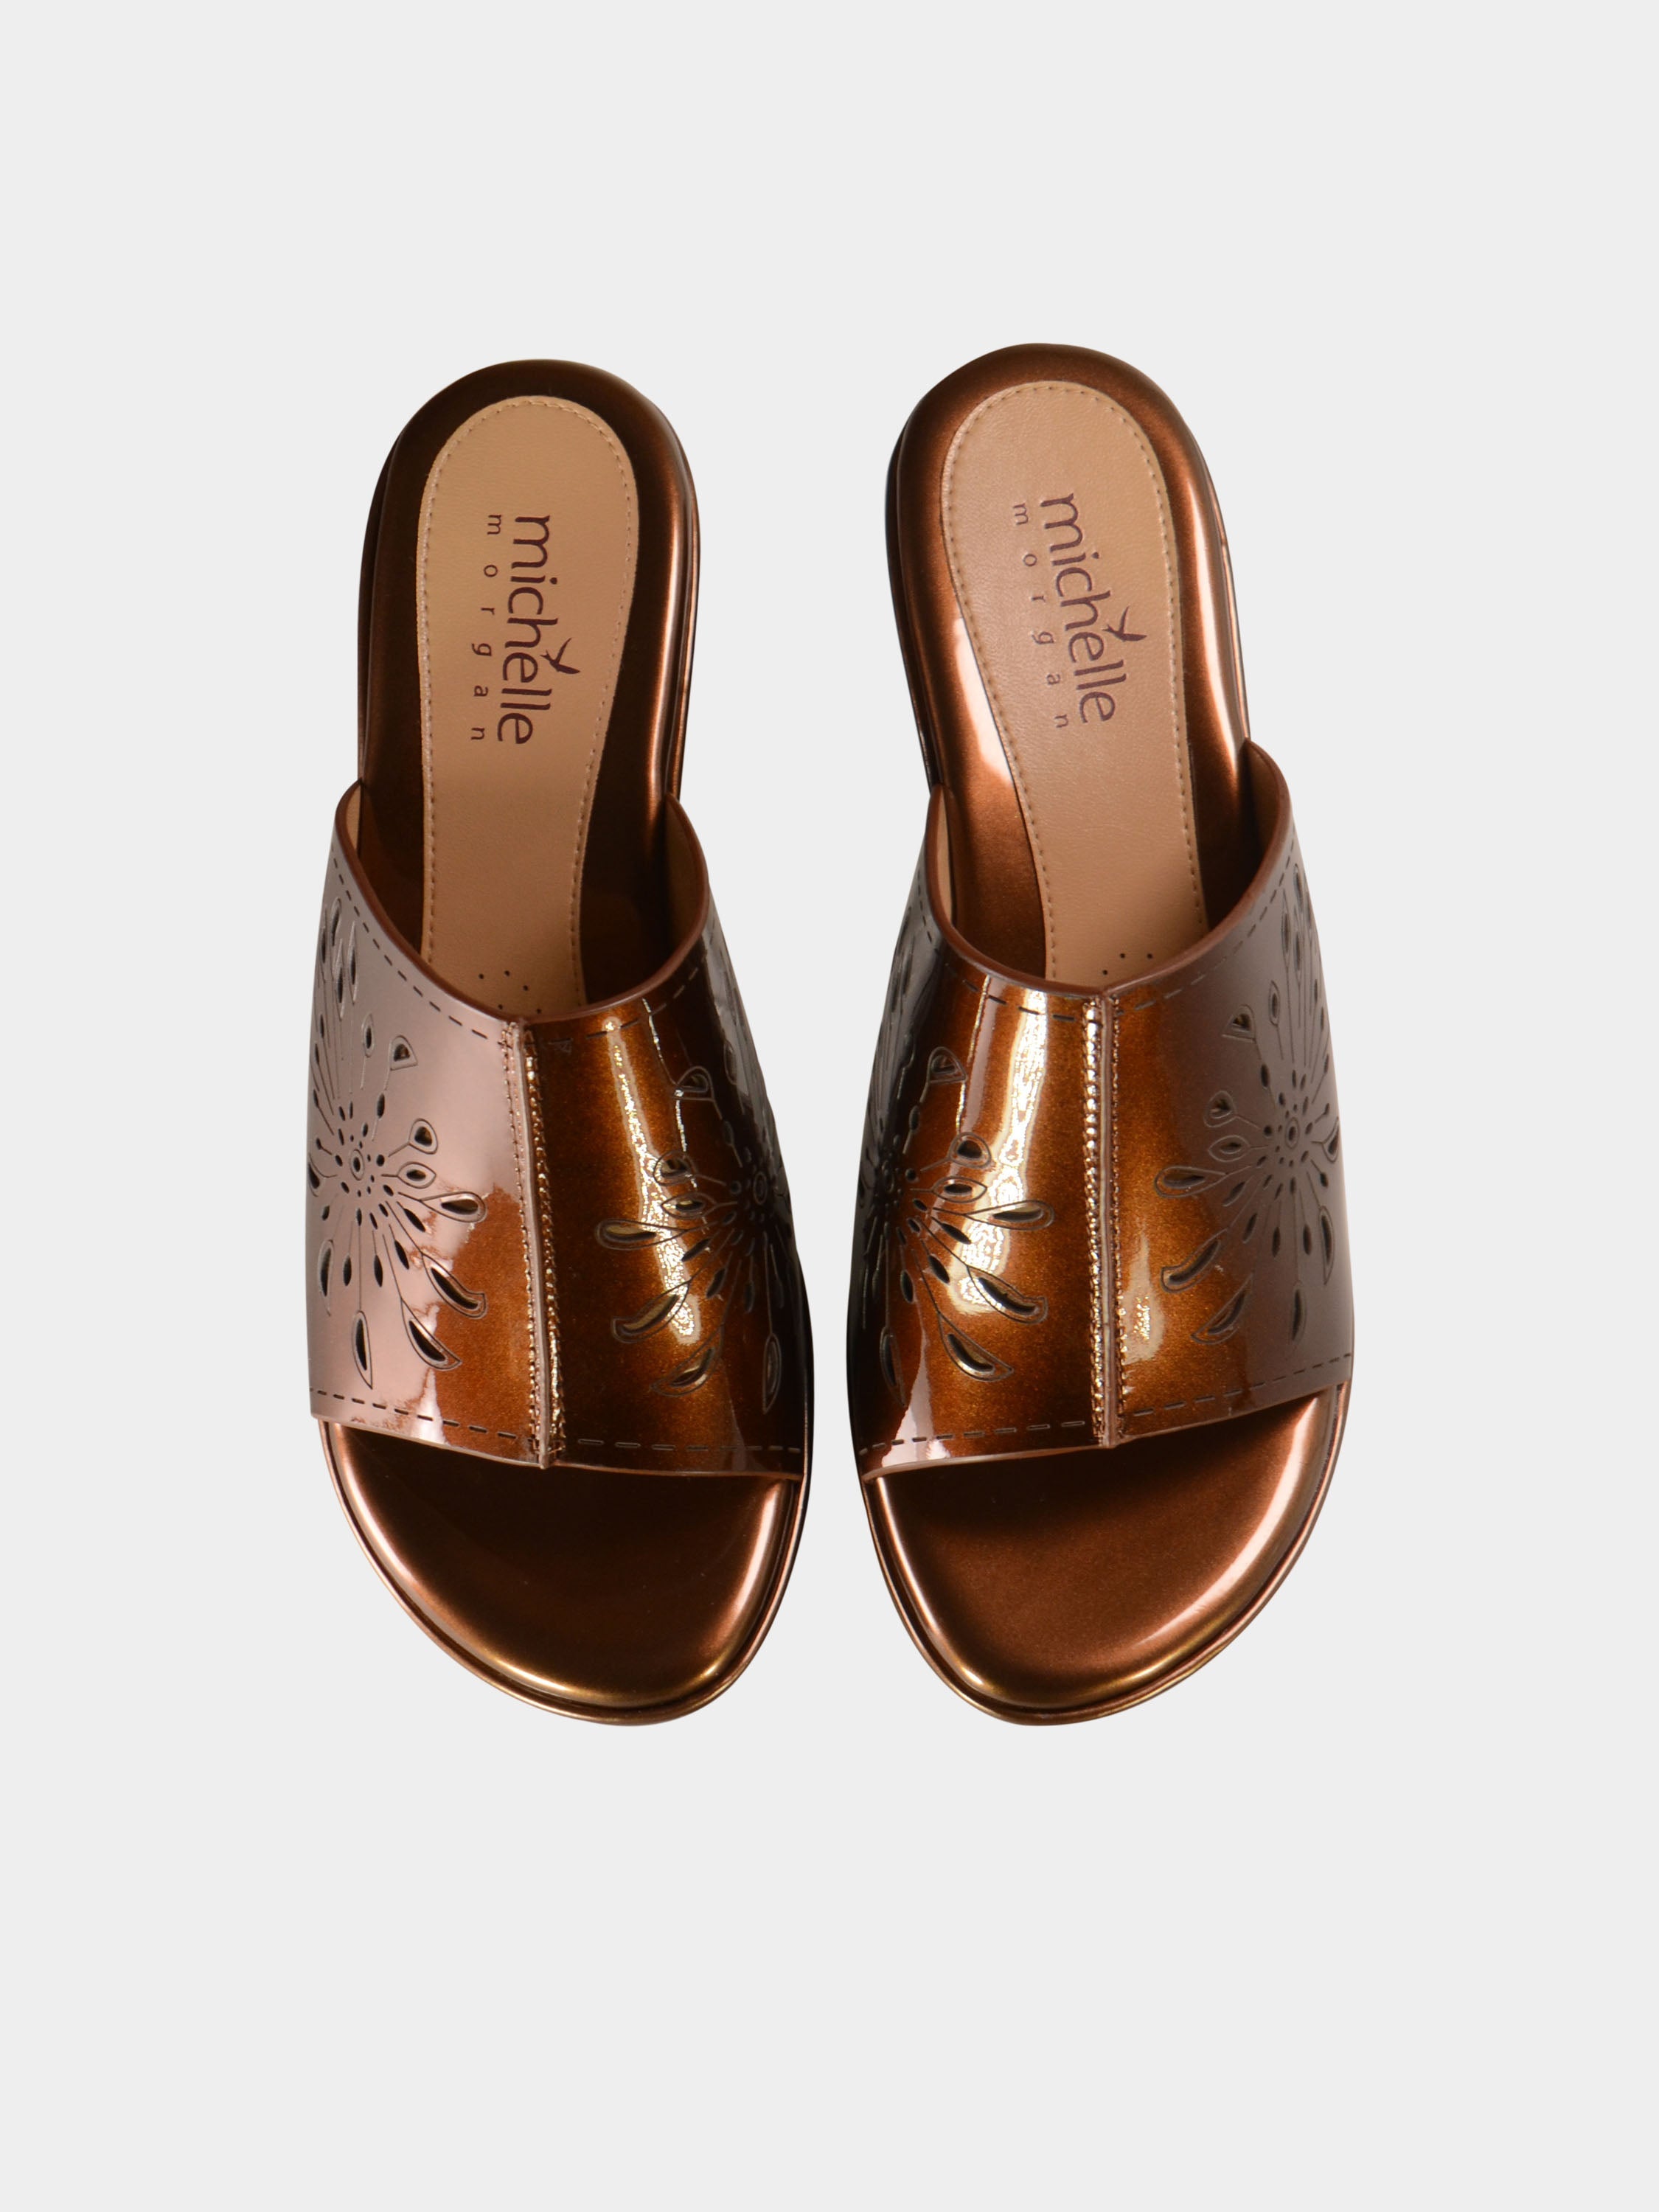 Michelle Morgan 1928-1 Women's Wedge Sandals #color_Brown